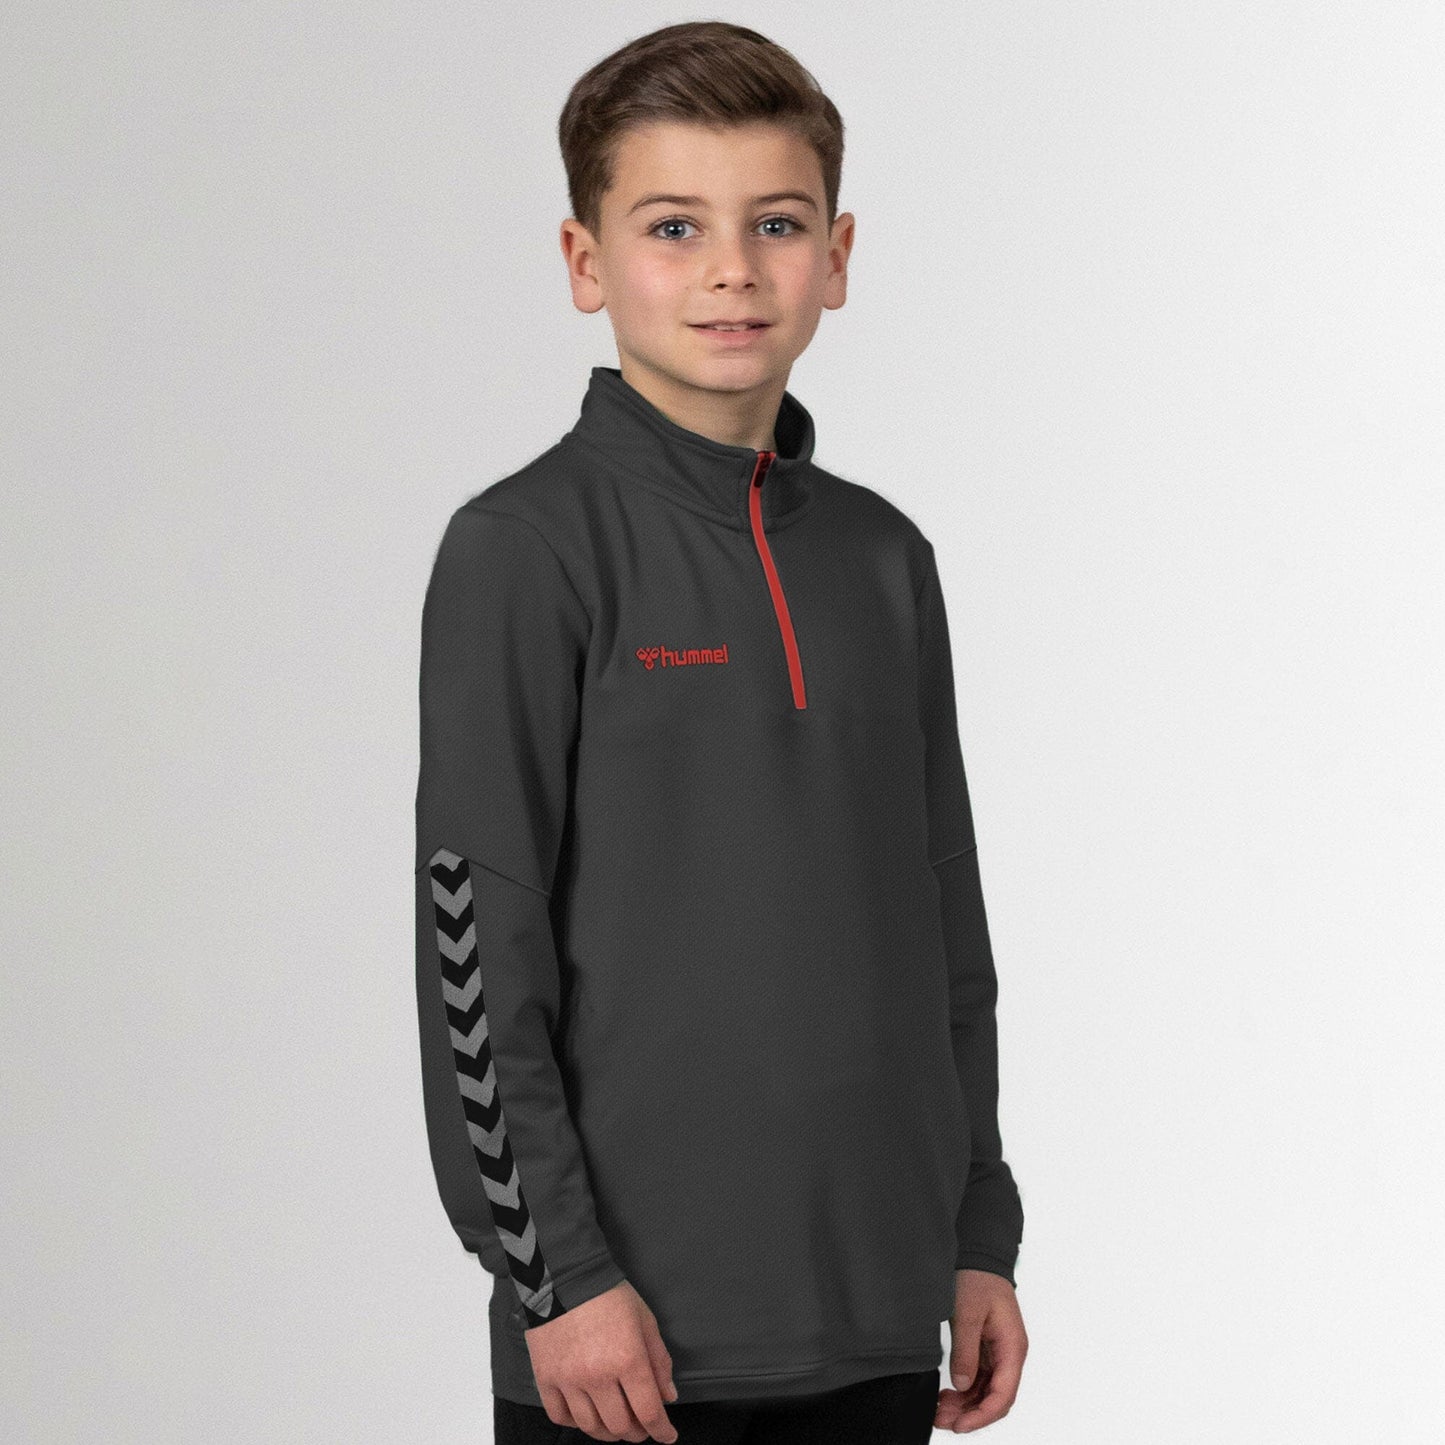 Hummel Boy's Arrow Arm Printed Quarter Zipper Sports Sweat Shirt Boy's Sweat Shirt HAS Apparel Graphite 4 Years 